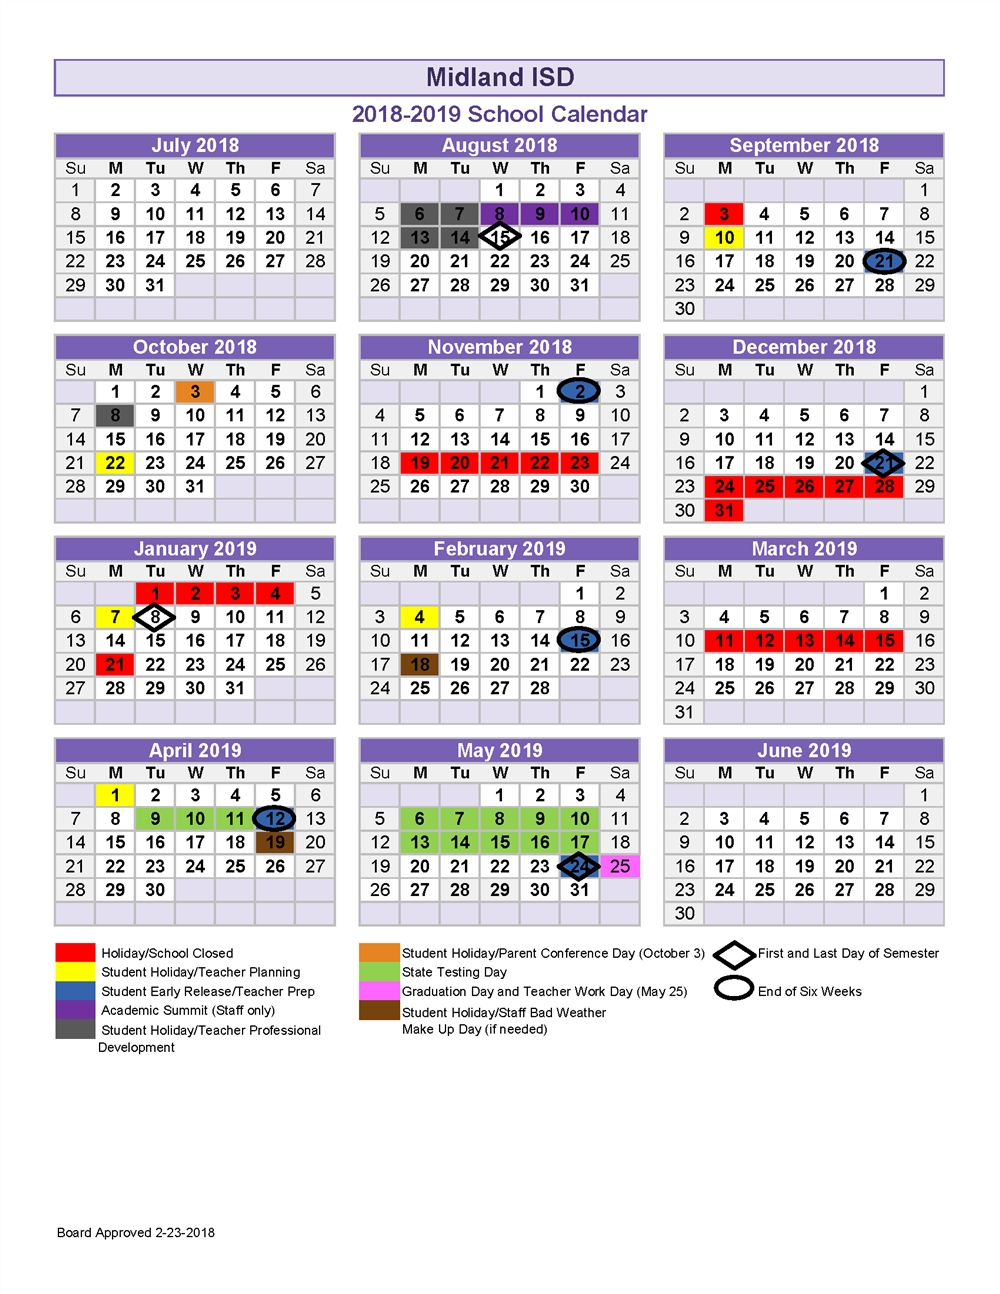 lee-county-schools-calendar-qualads